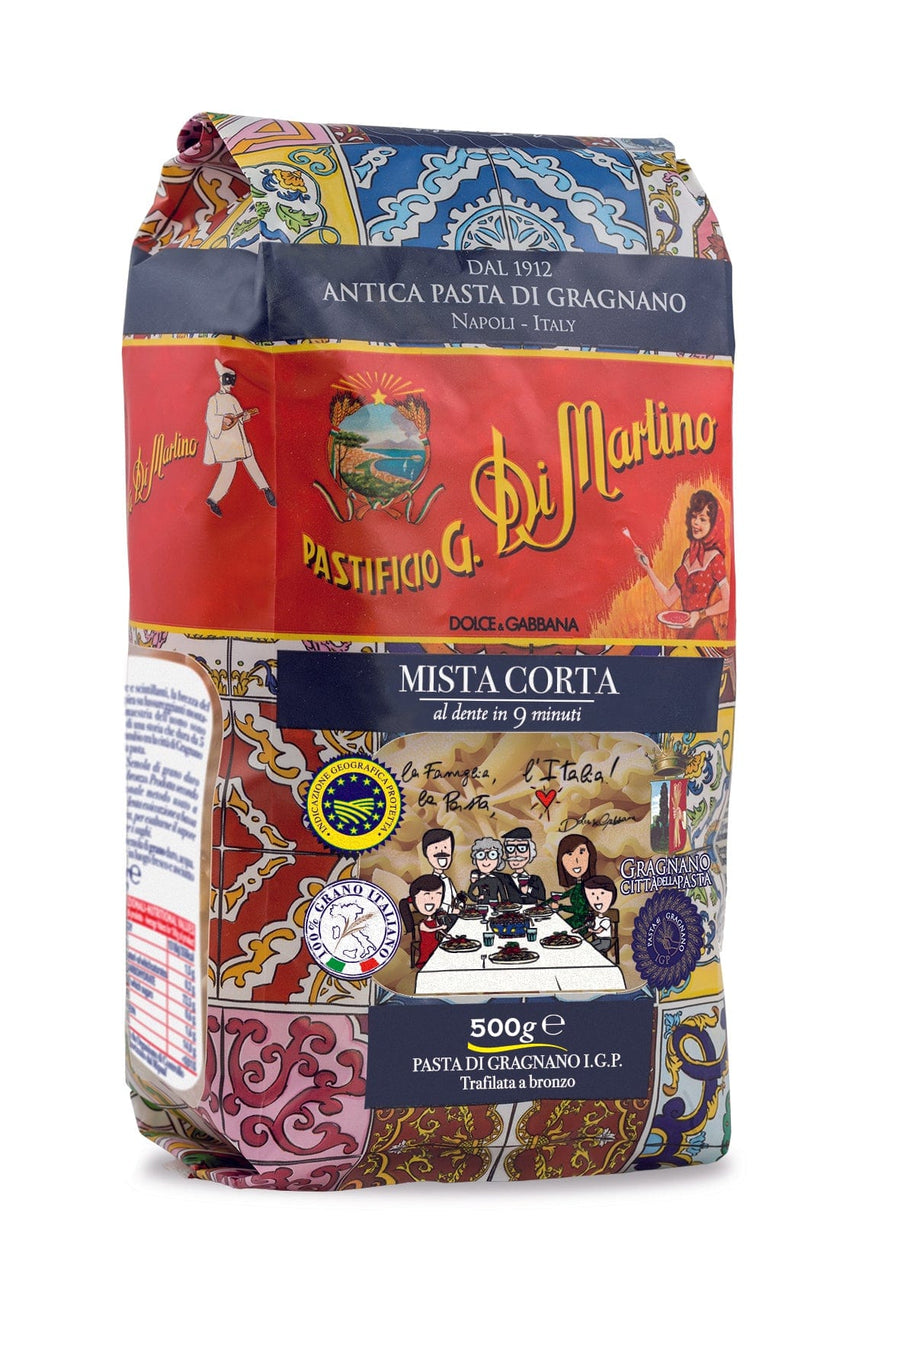 Dolce & Gabana - Di Martino  - MISTA CORTA "Mixed Short Pasta"  - Pack 6 x 1.1 lb - Premium Pasta IMPORTED FROM ITALY 